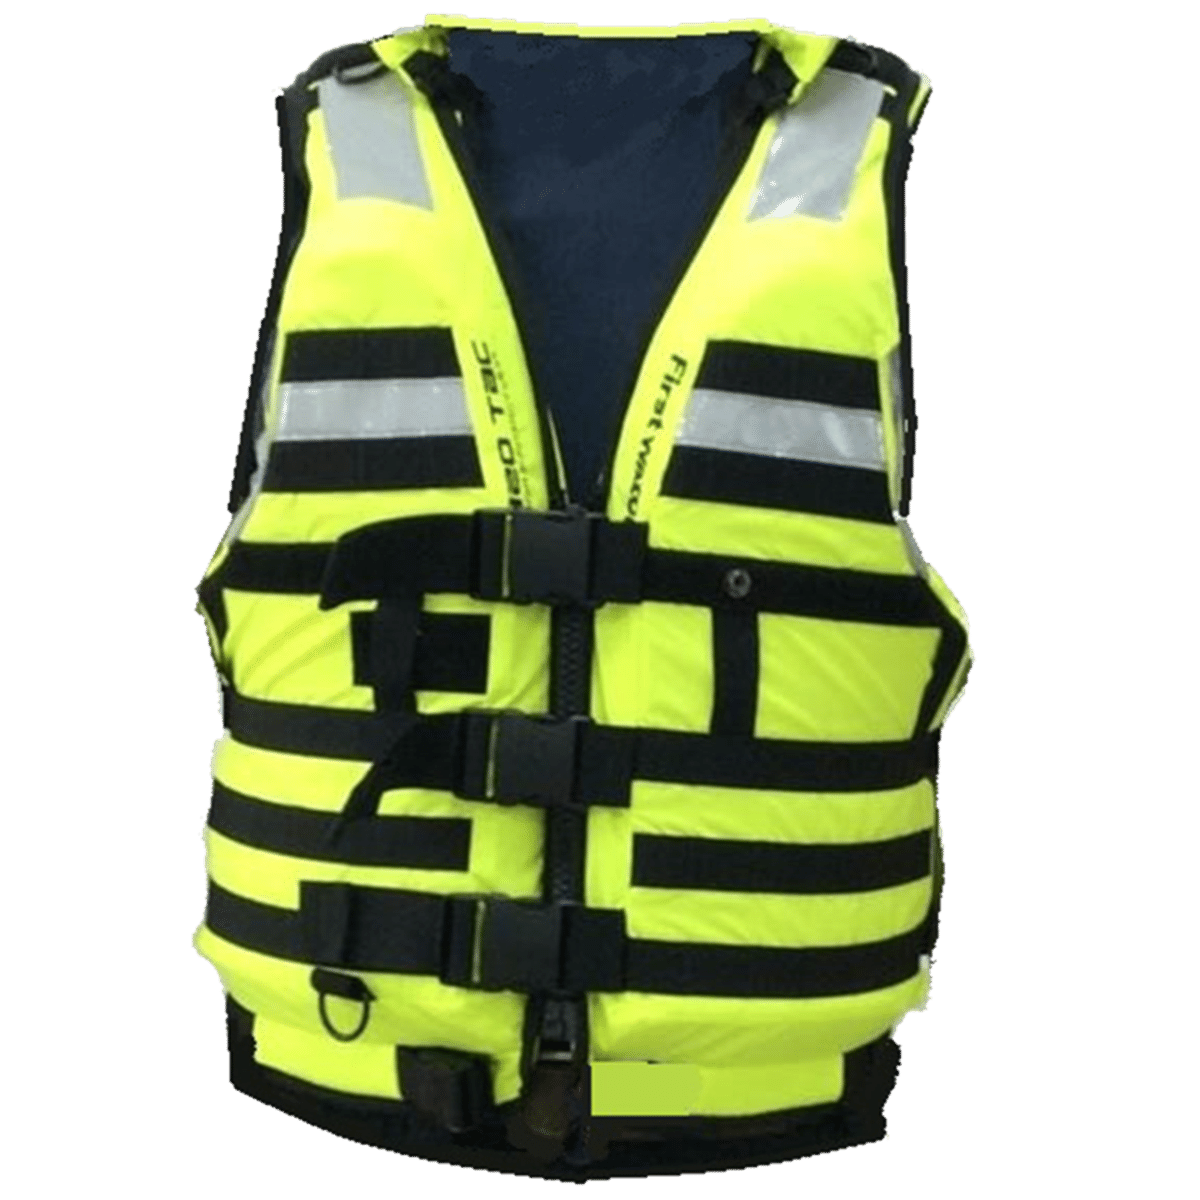 CYCLONE Medium/Large  Adult PFD3 Buoyancy vest NEW 